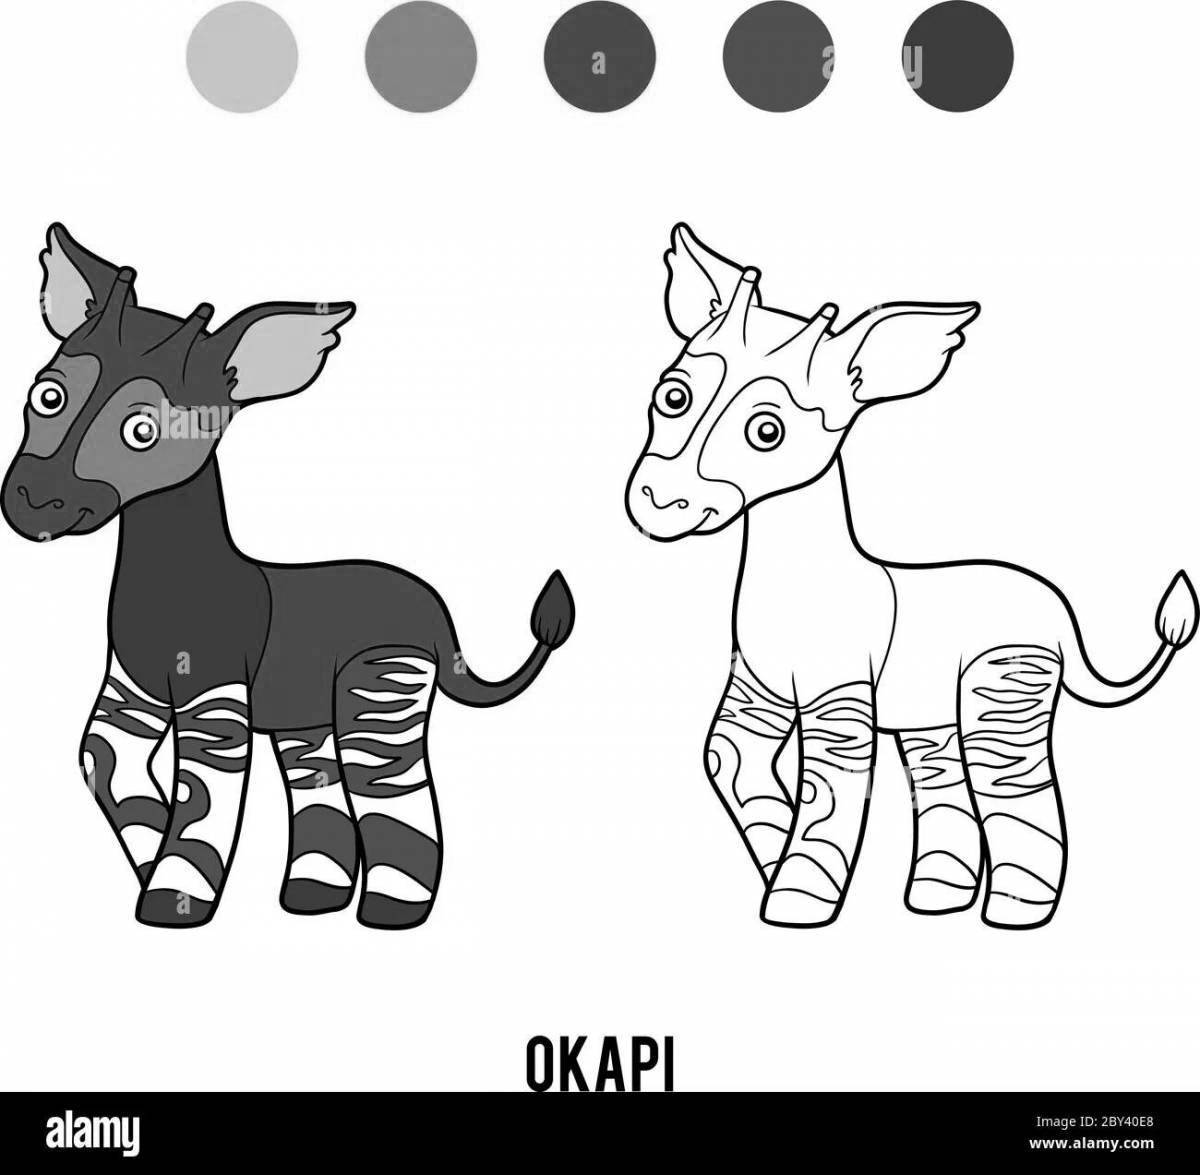 Charming okapi coloring book